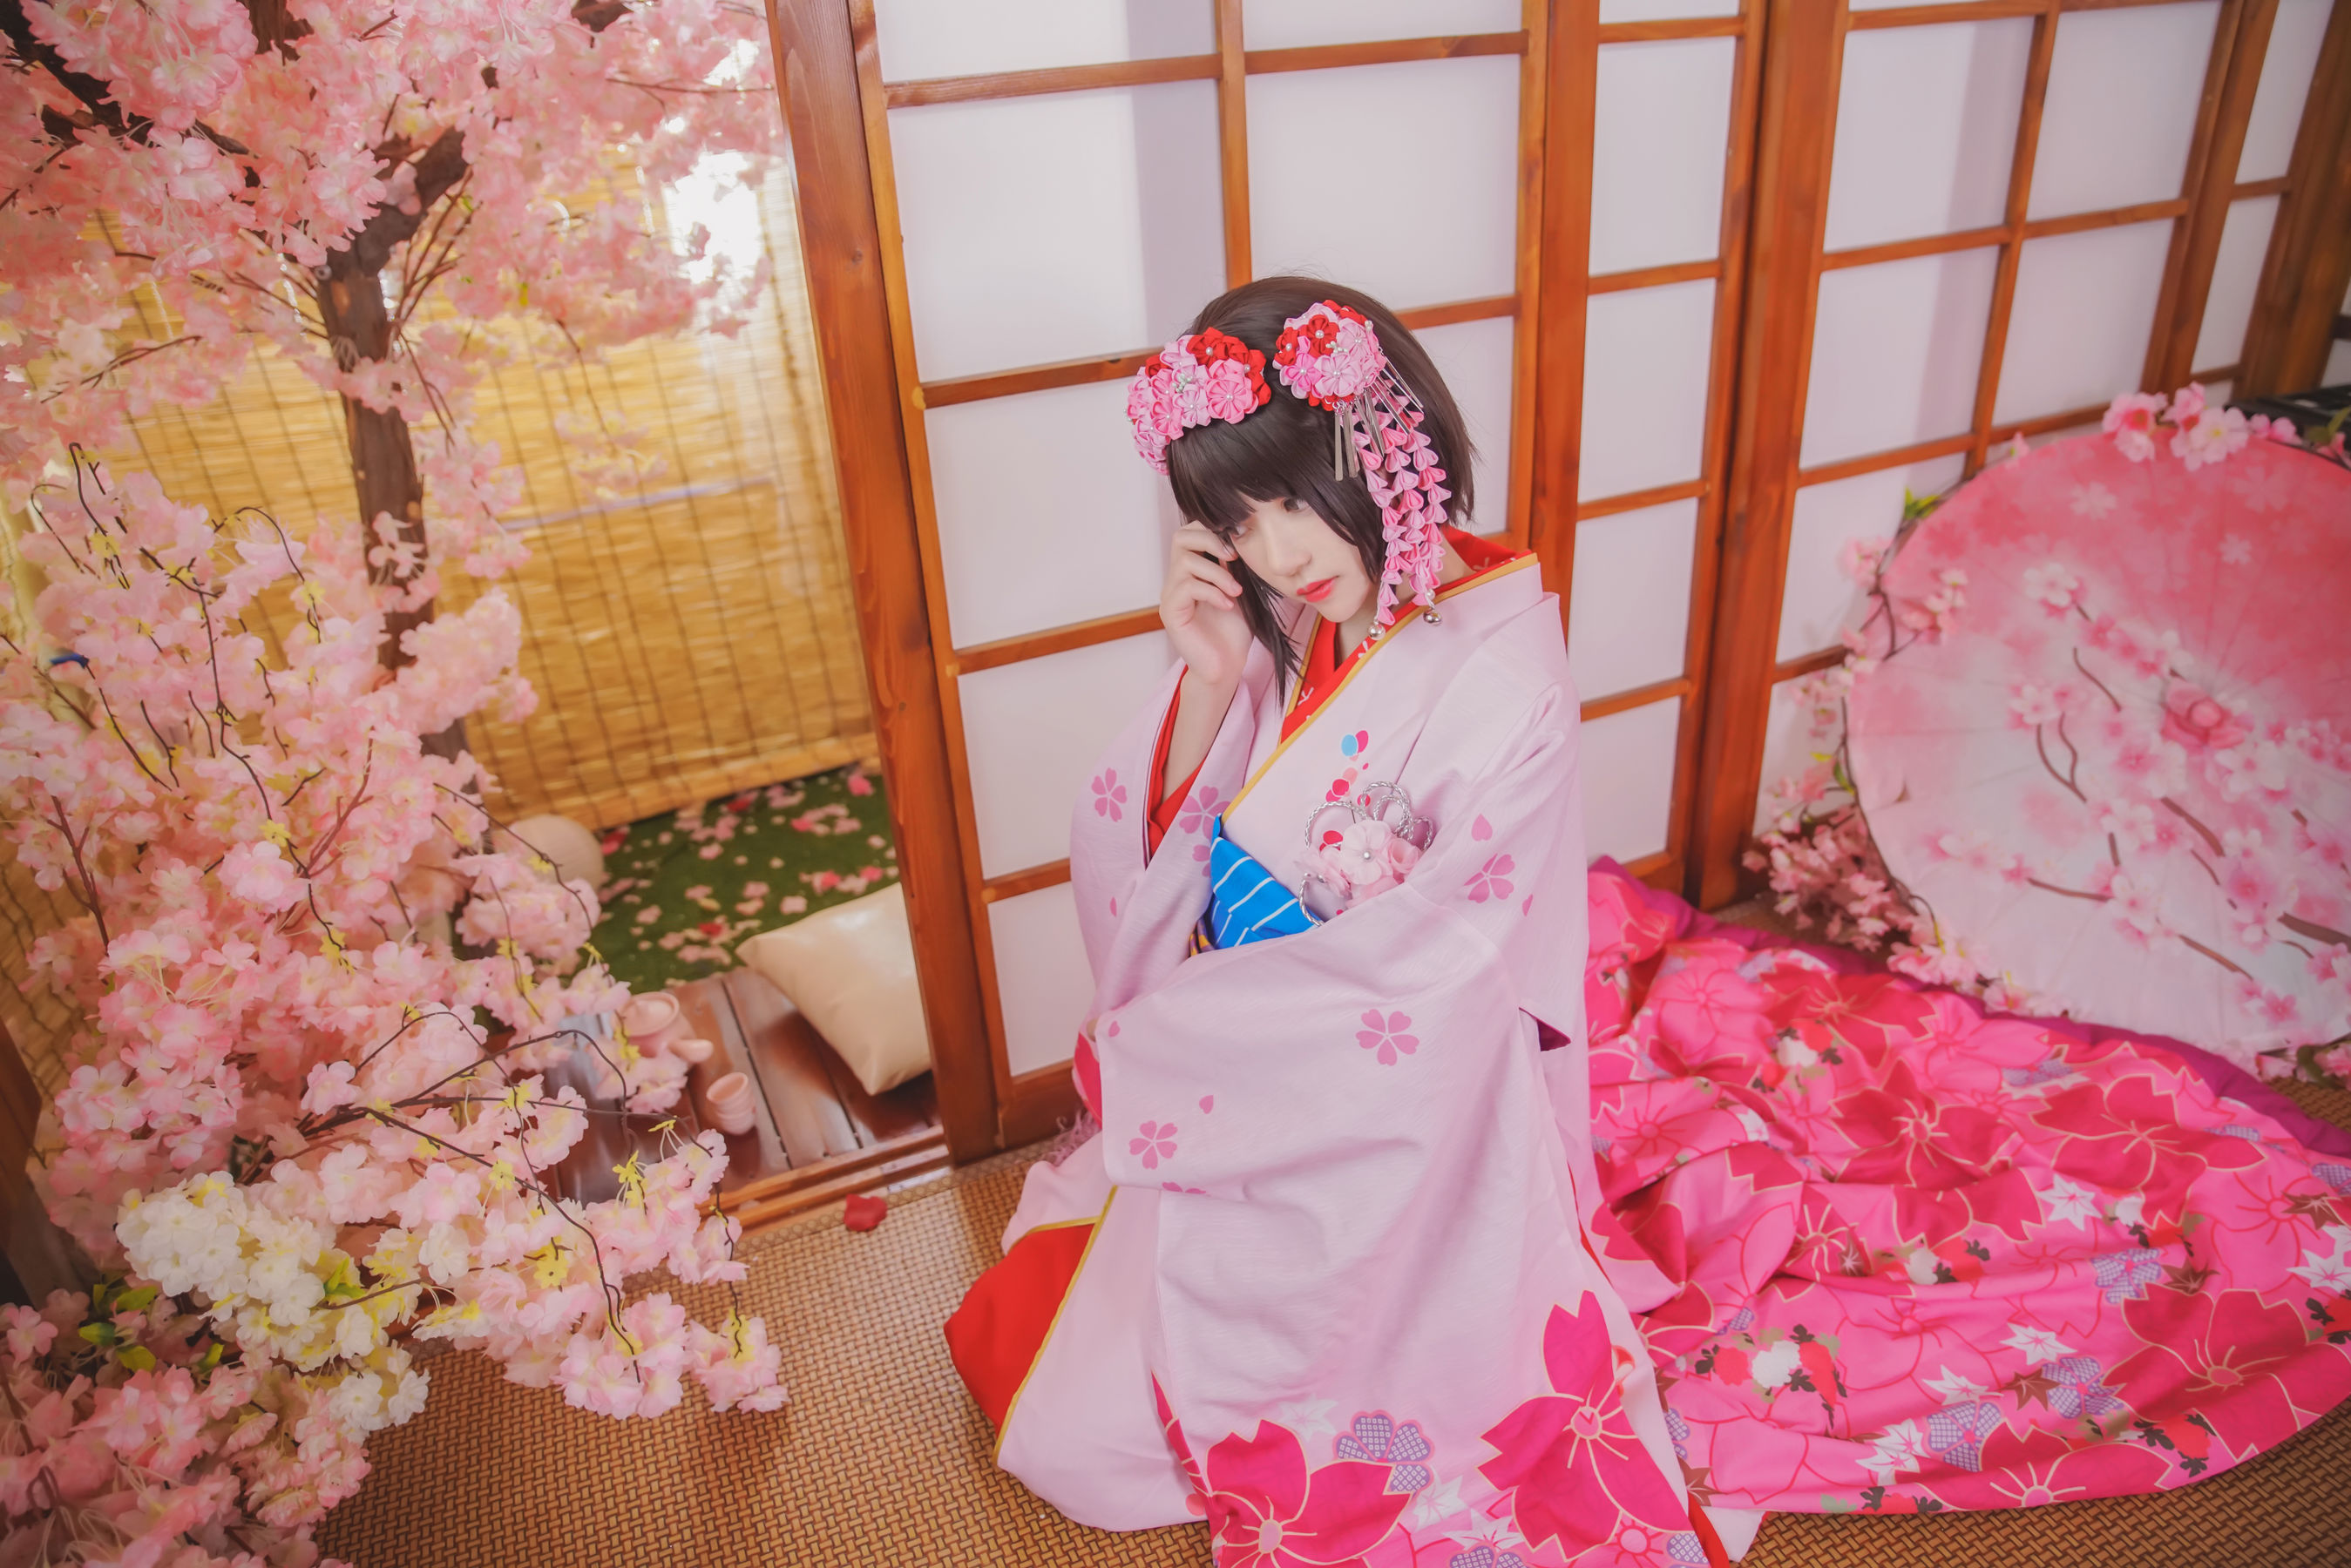 People 2698x1800 CherryNeko women model Asian kimono short hair brunette dark hair flowers